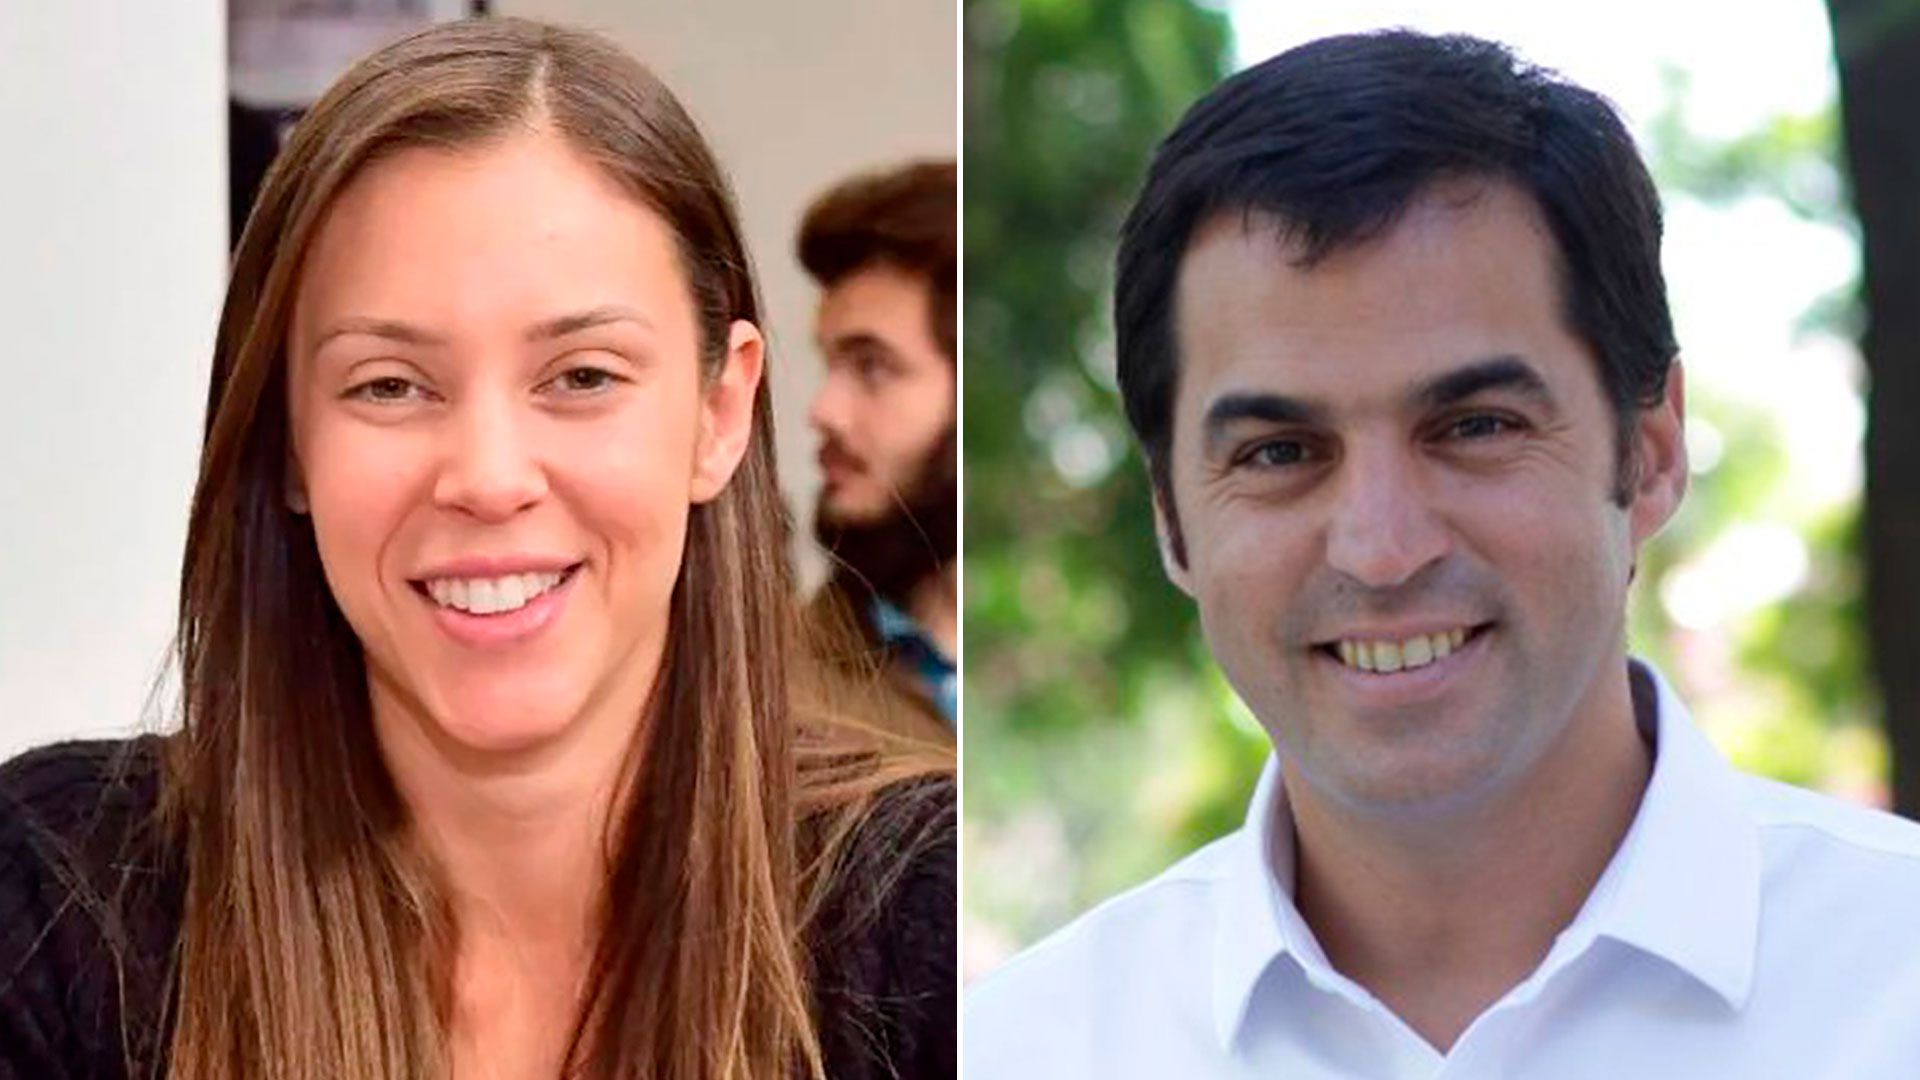 Macarena Posse and Ramón Lanús, the pre-candidates for the Juntos por el Cambio internship in San Isidro